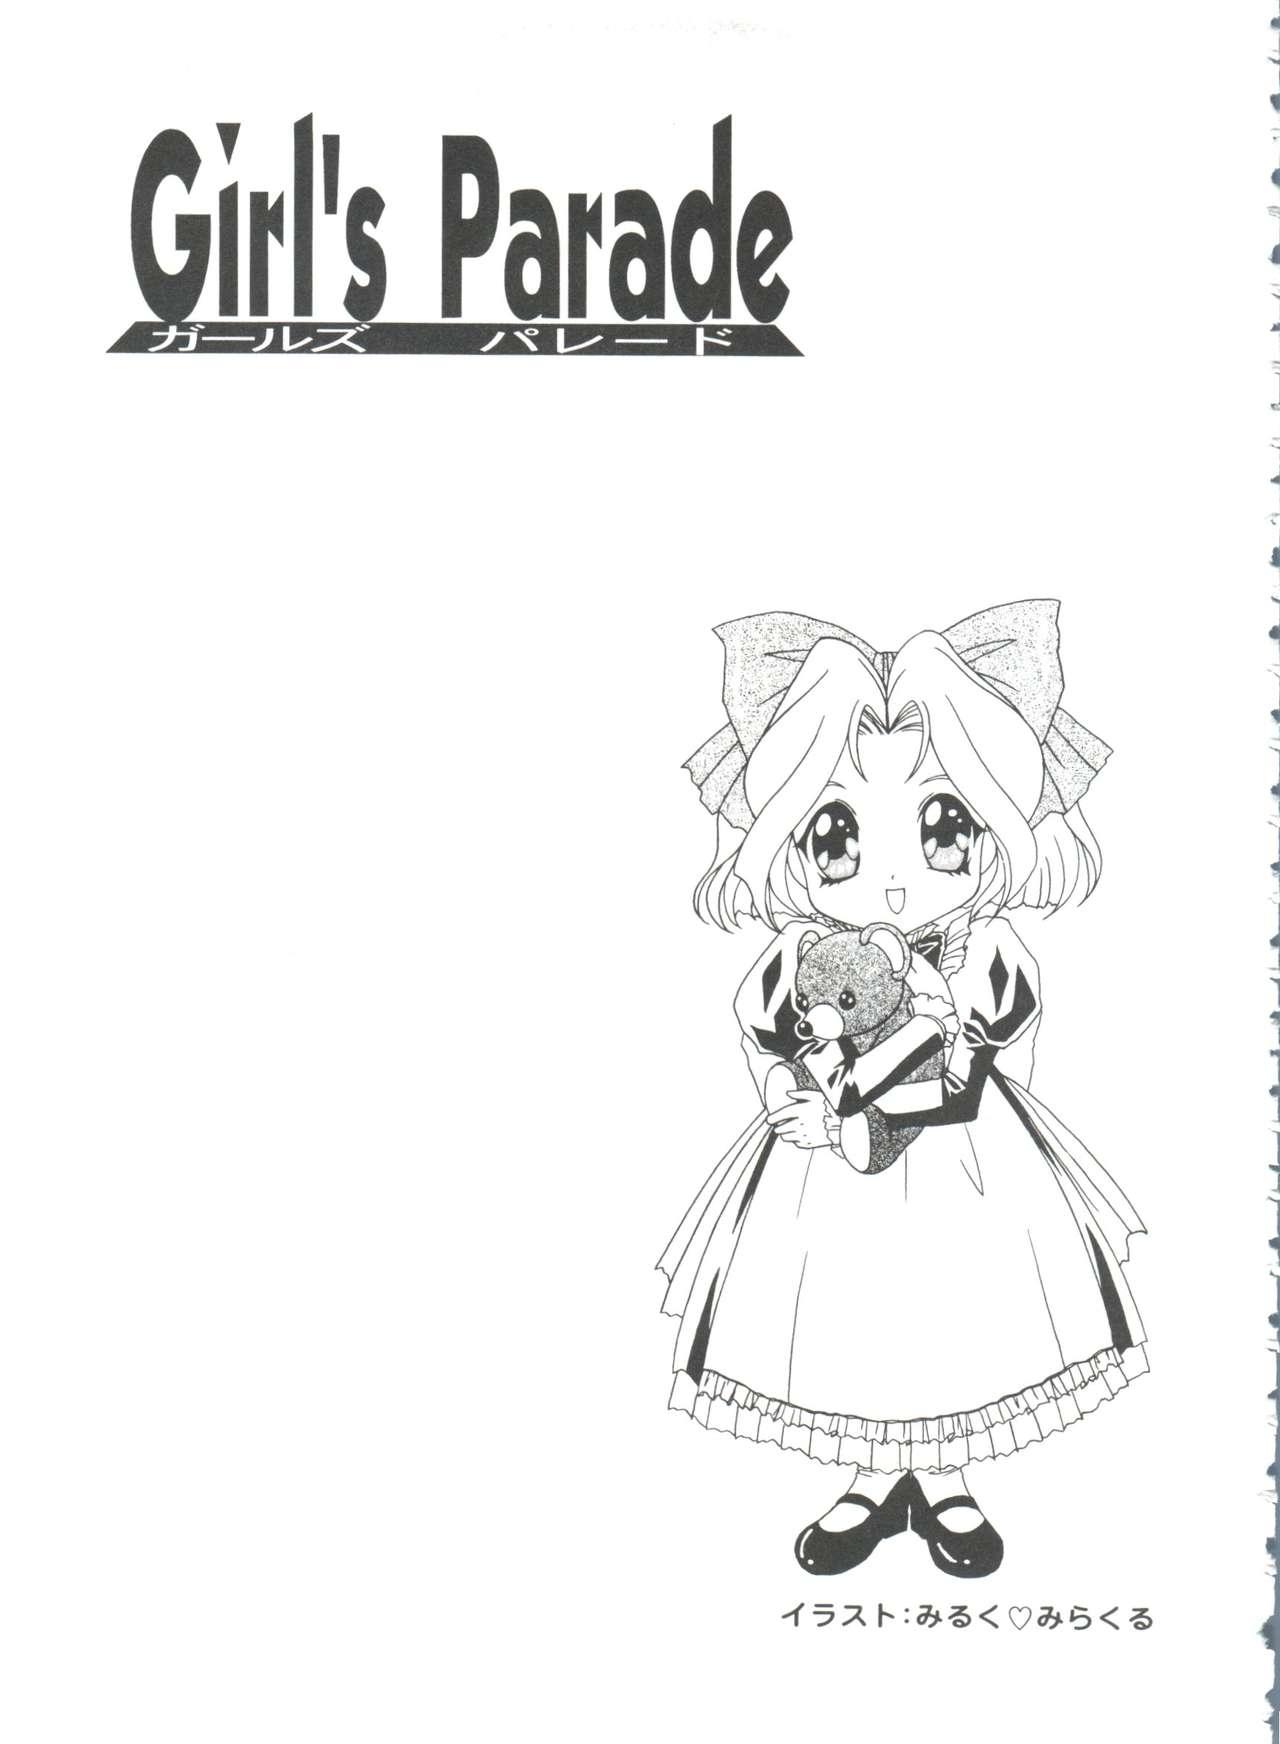 Girl's Parade 99 Cut 1 155